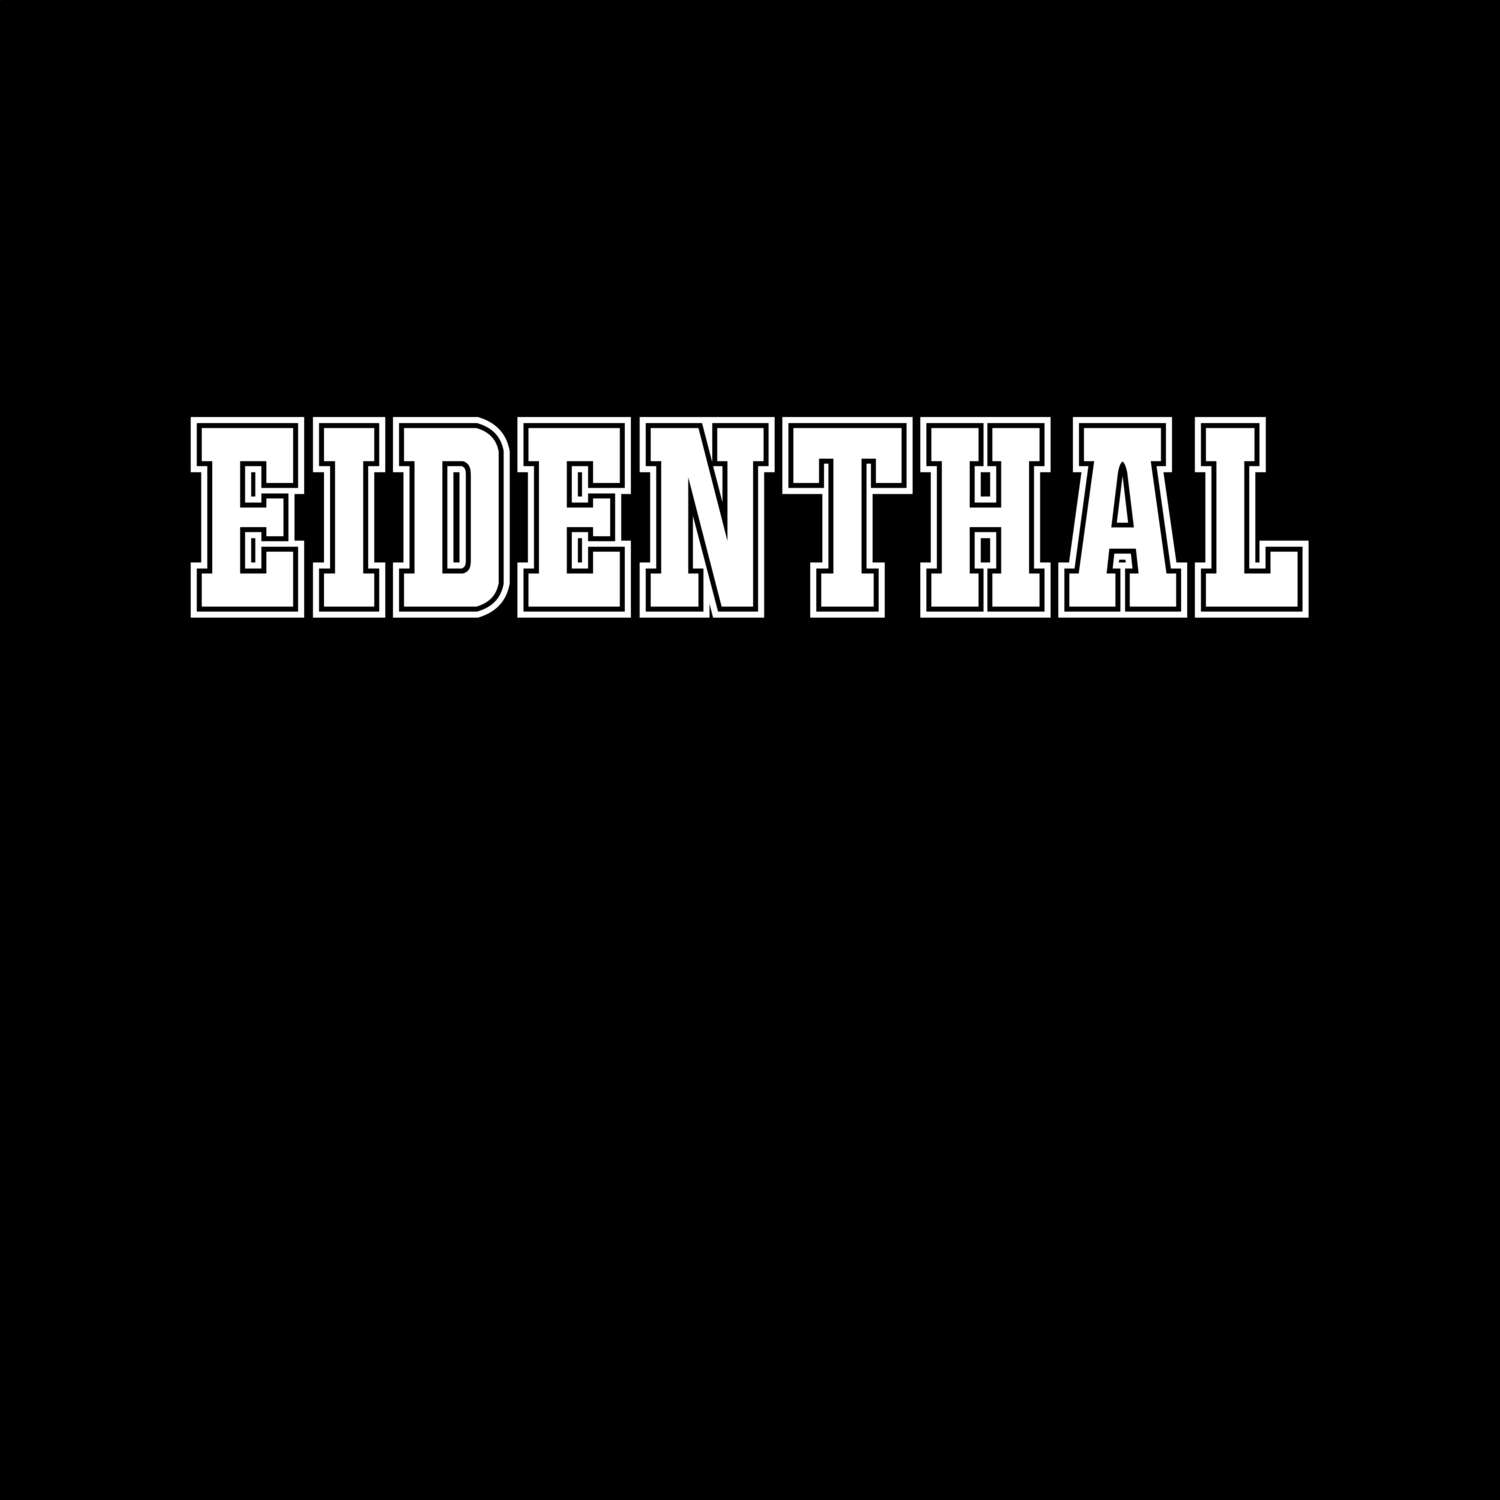 Eidenthal T-Shirt »Classic«